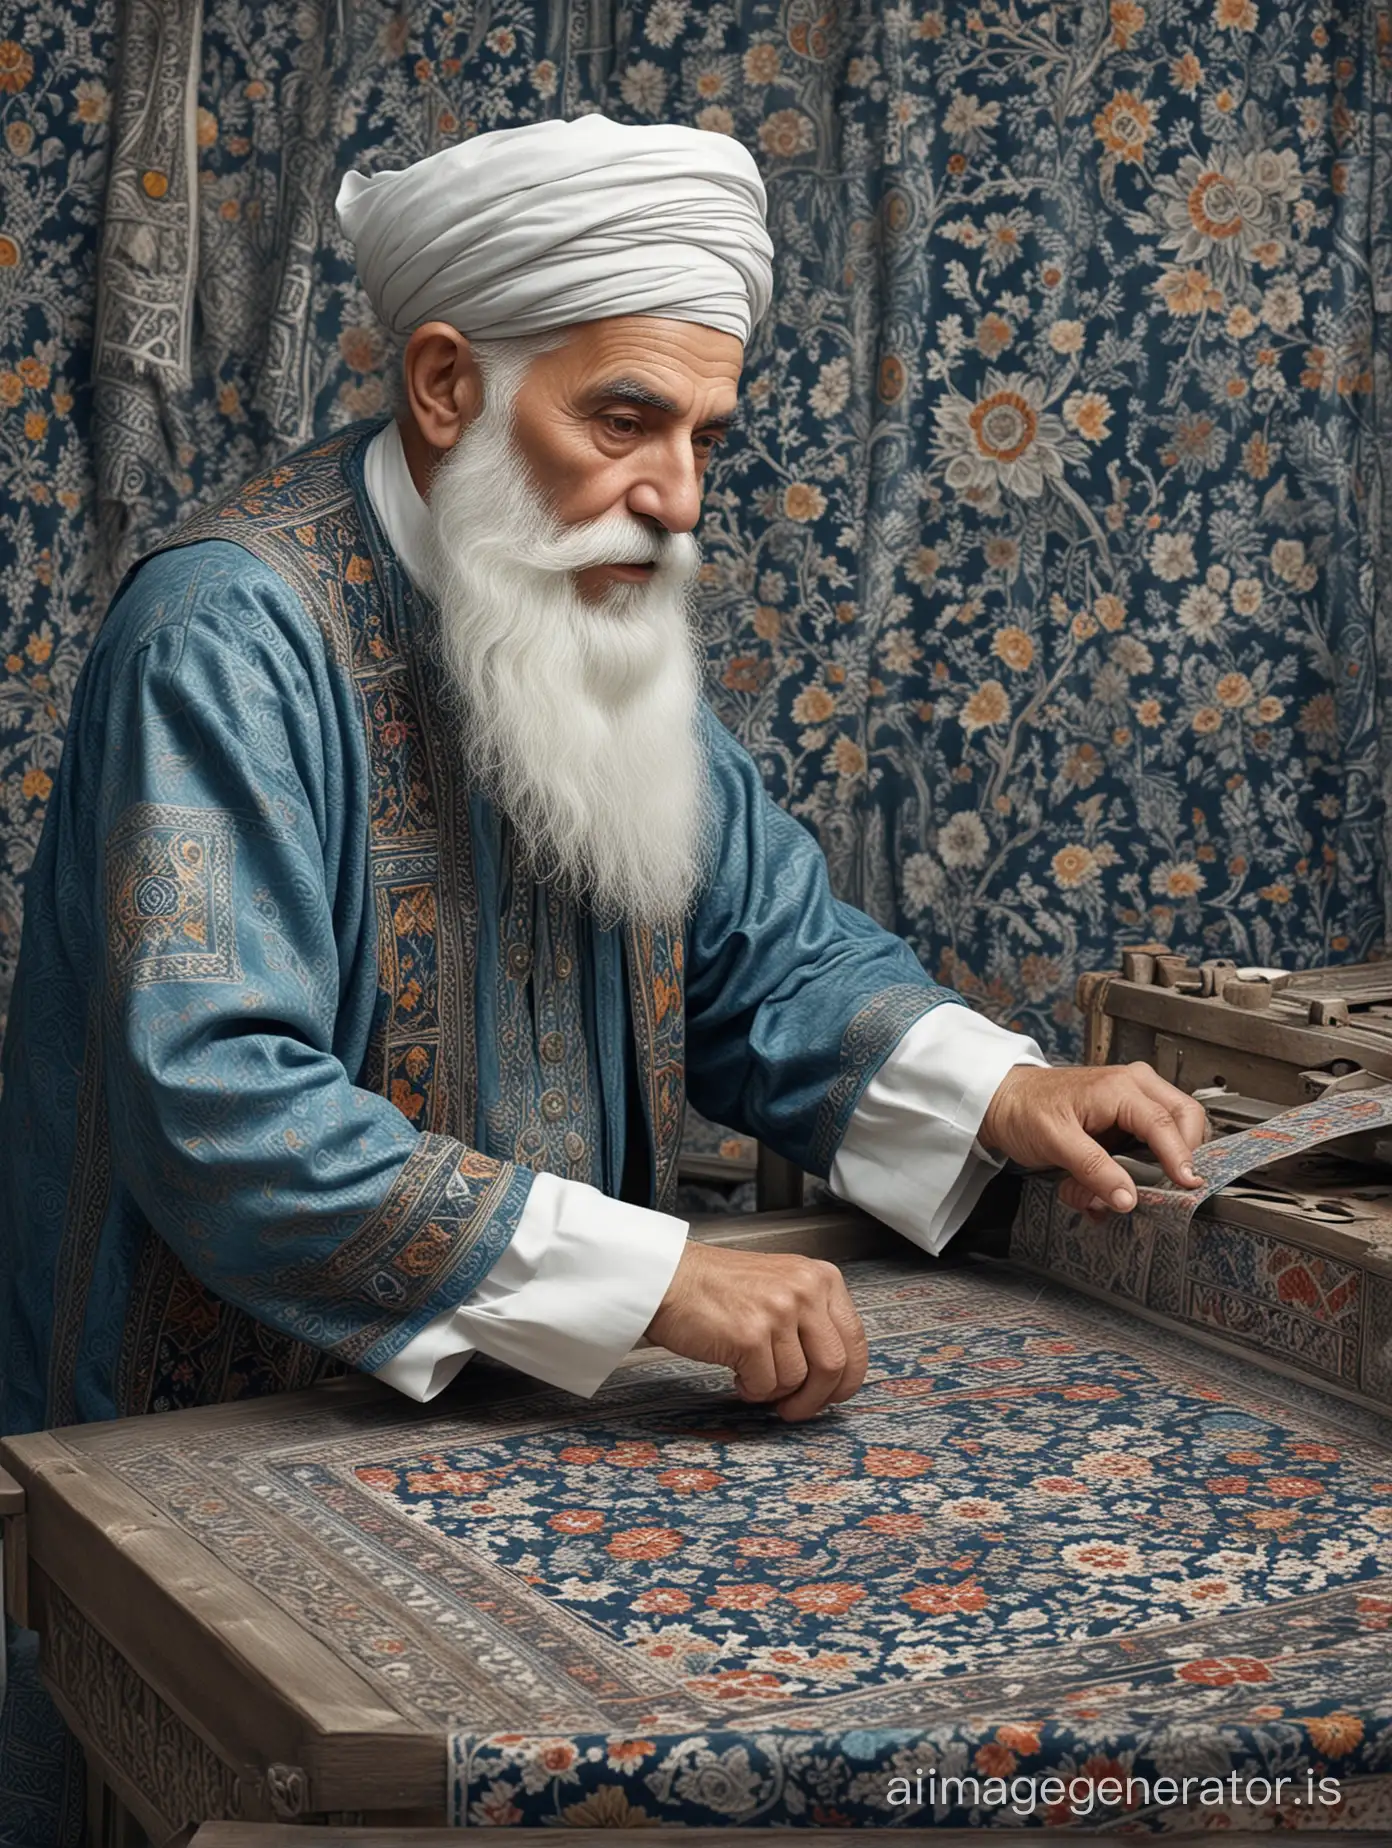 HyperRealistic-Elderly-Man-with-BlueGrey-Skin-and-White-Beard-Operating-Industrial-Digital-Printing-Machine-on-Persian-Folk-Art-Fabric